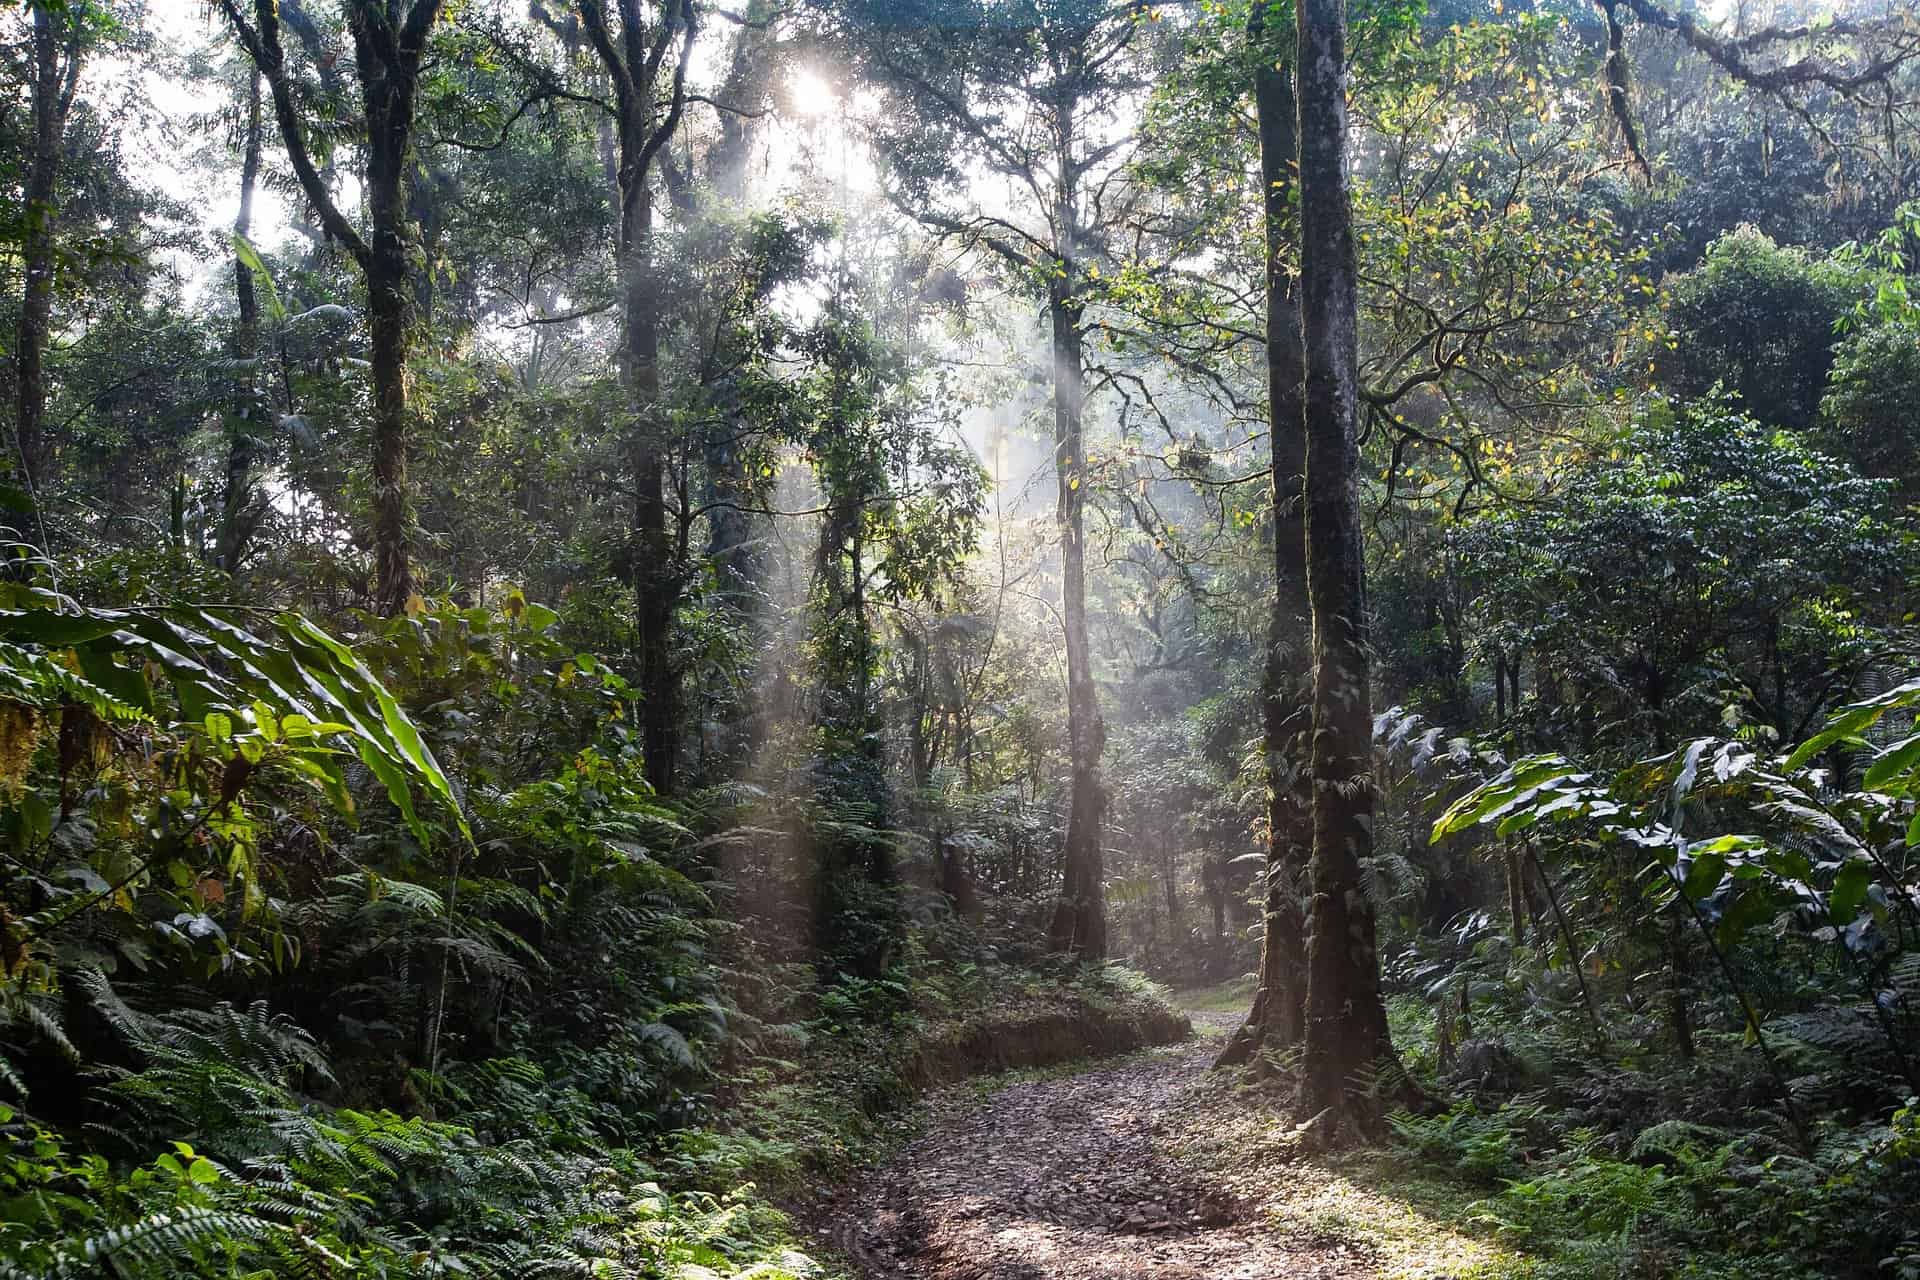 20 Rainforest Facts Biome, Animals, Plants, Climate & More